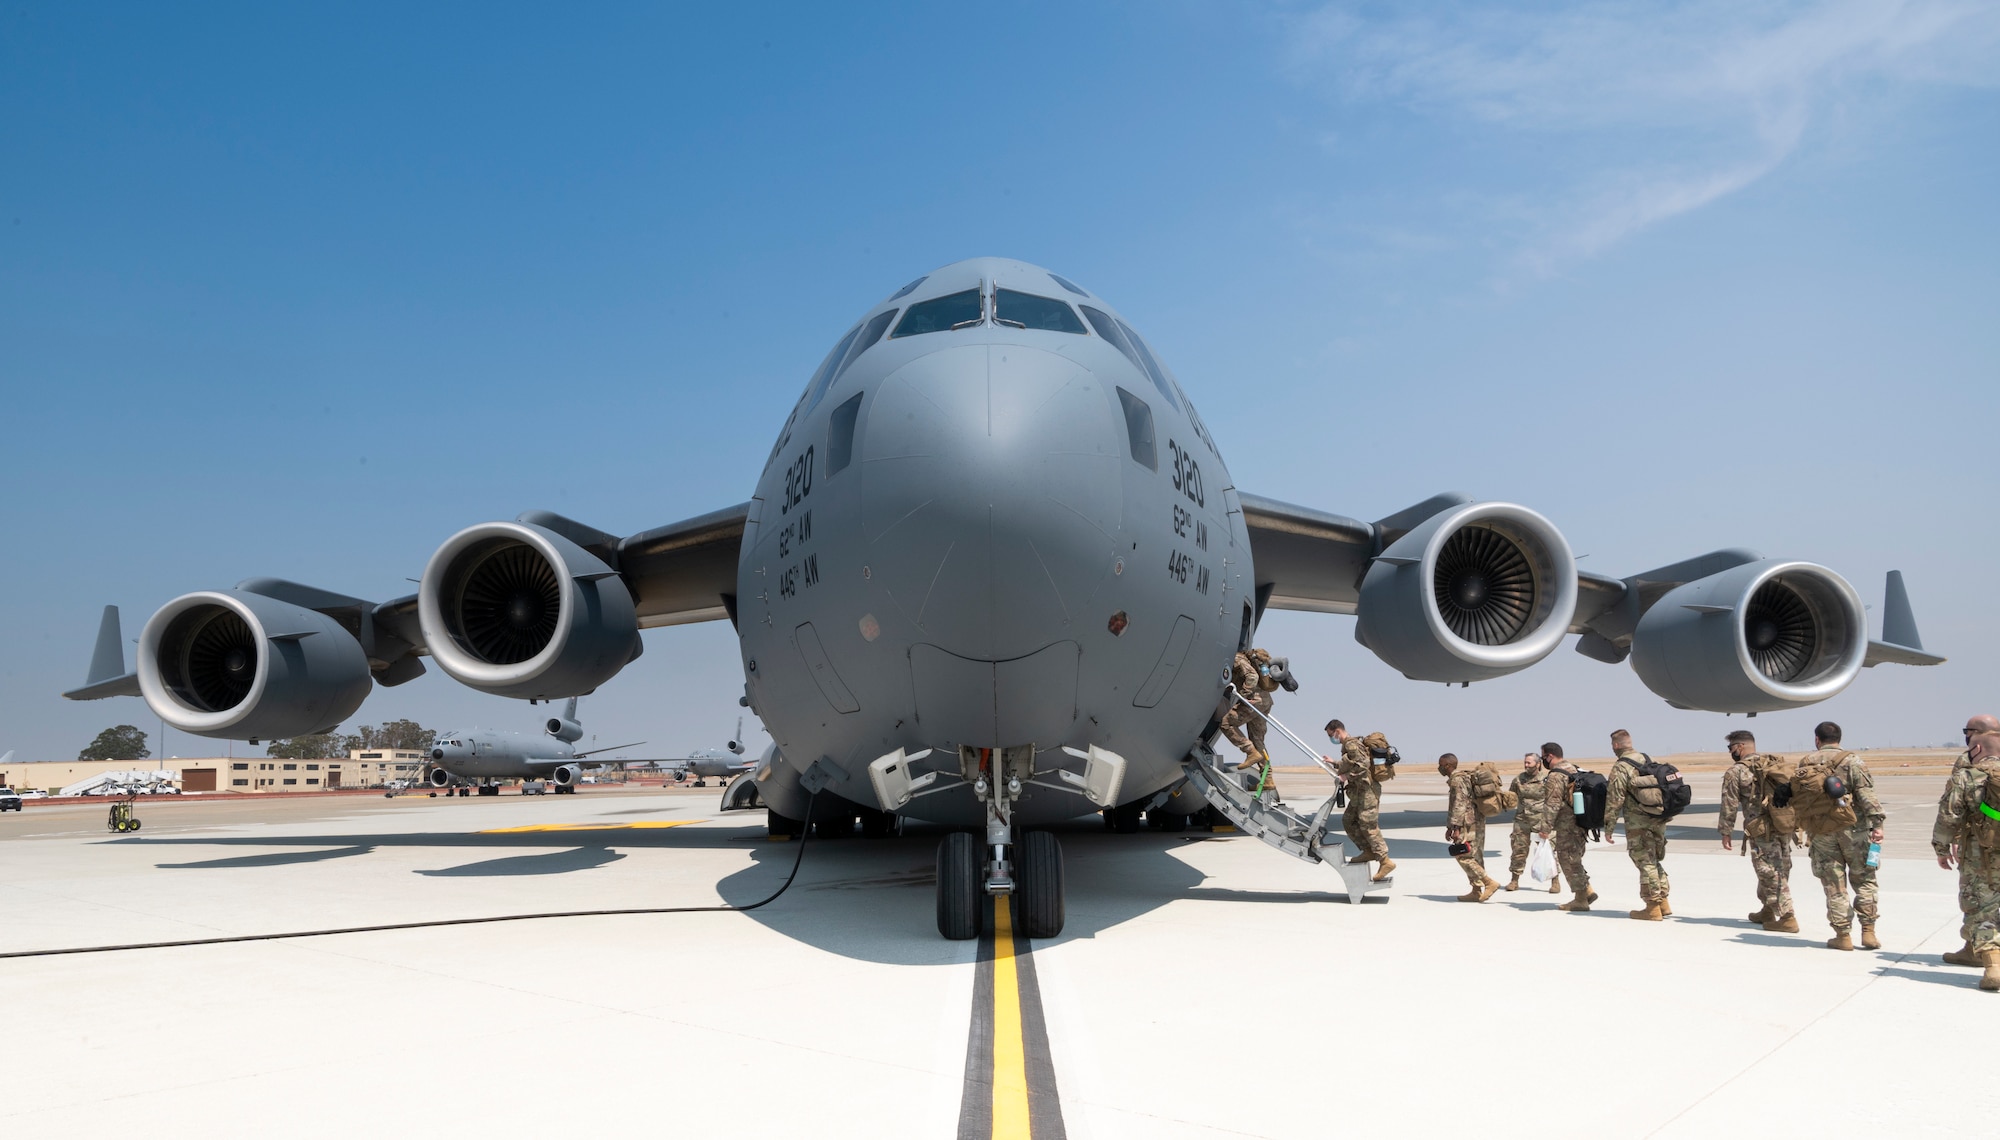 CRW deploys to Afghanistan for evacuation effort